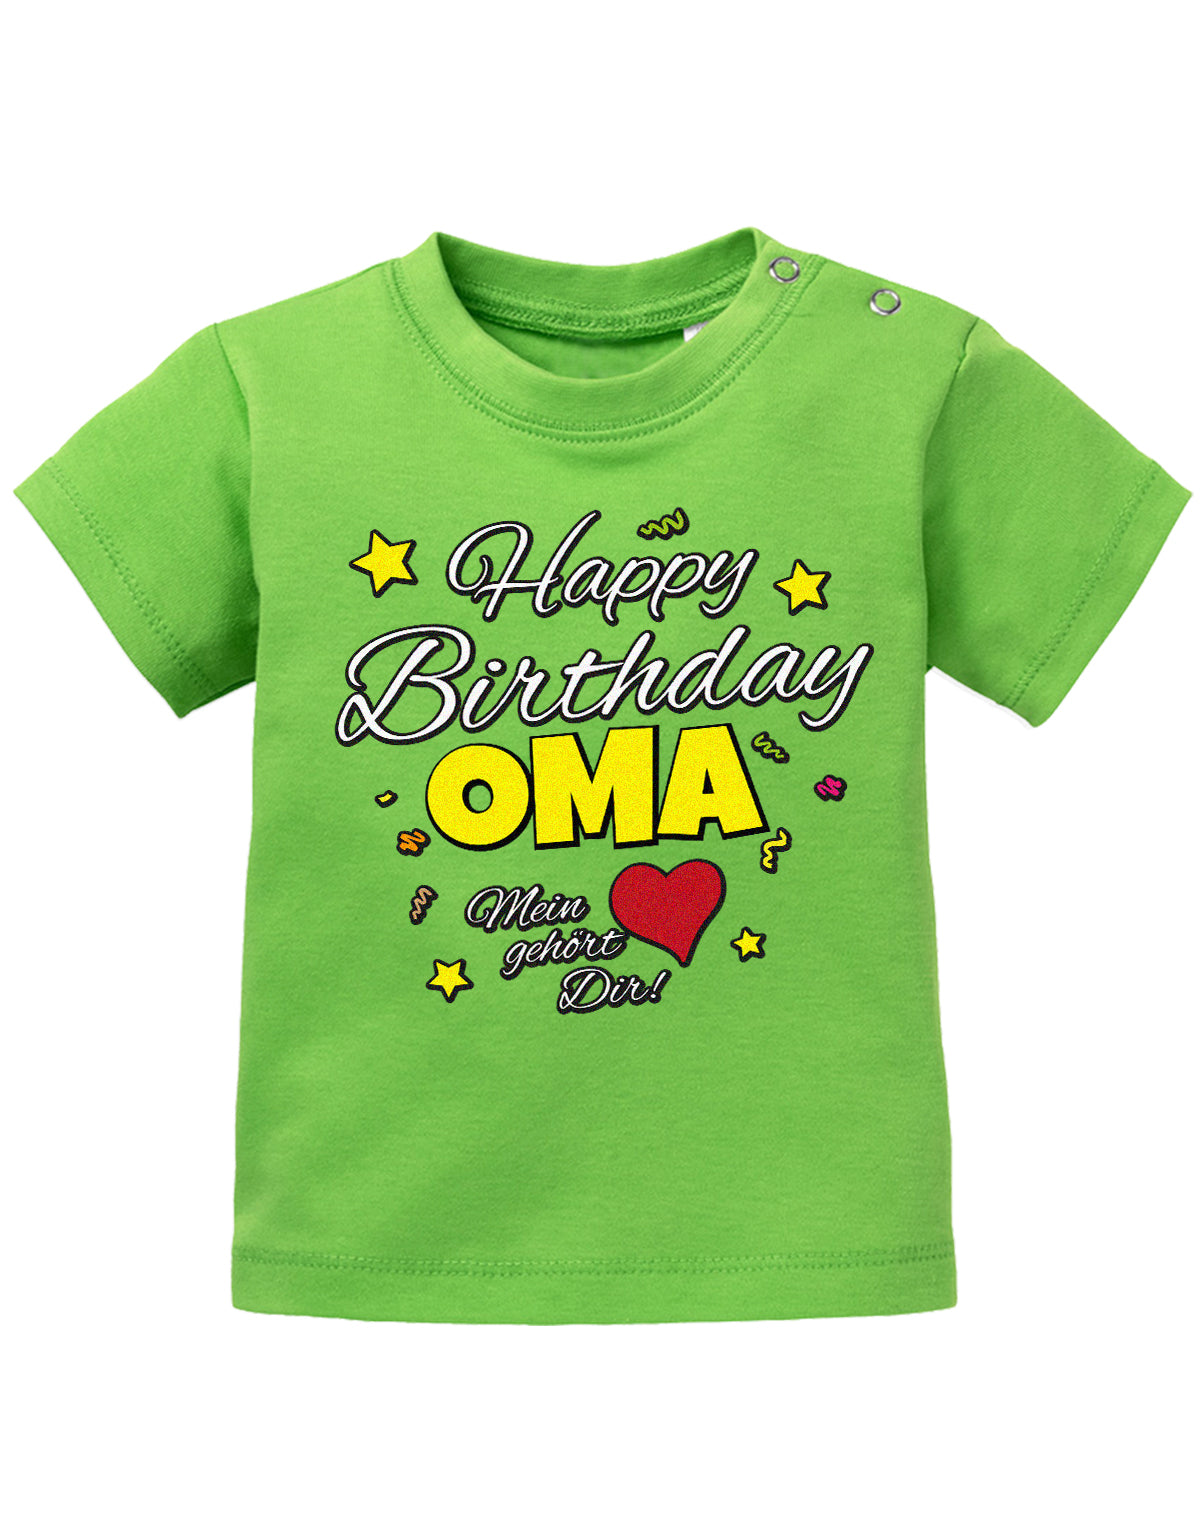 Oma Spruch Baby Shirt. Happy Birthday Oma, Mein Herz gehört dir. Grün